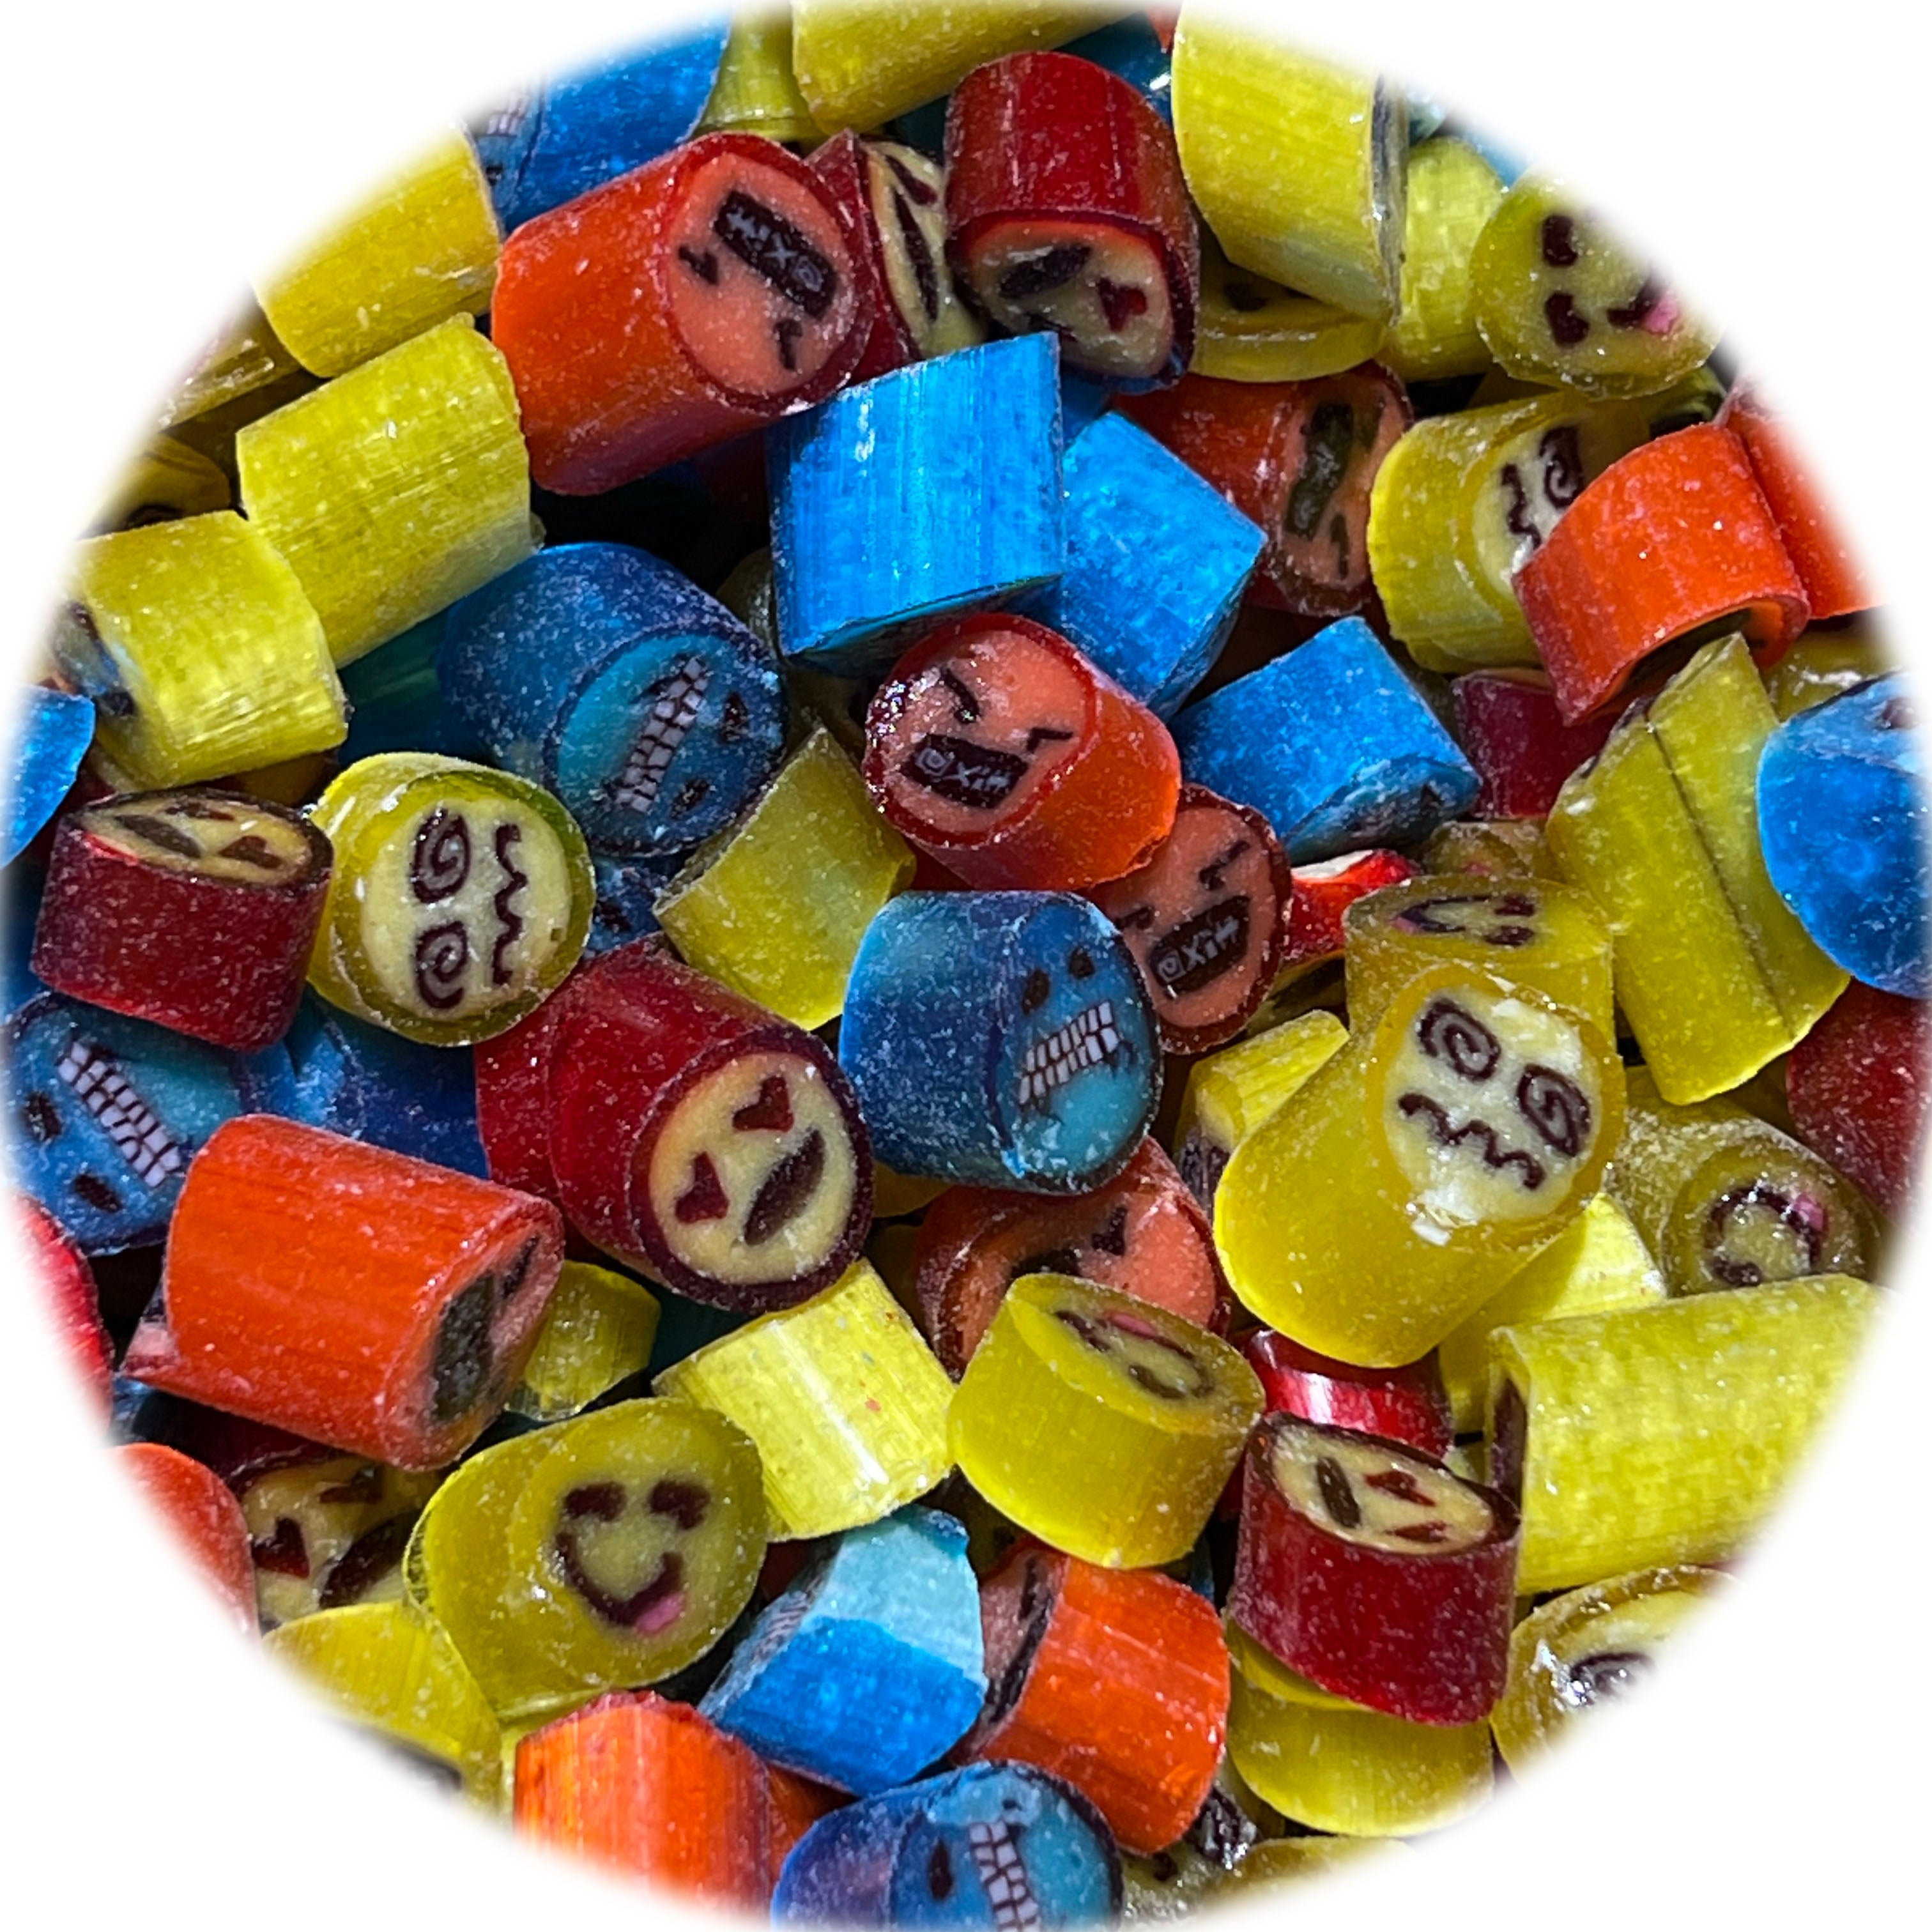 candy emoji